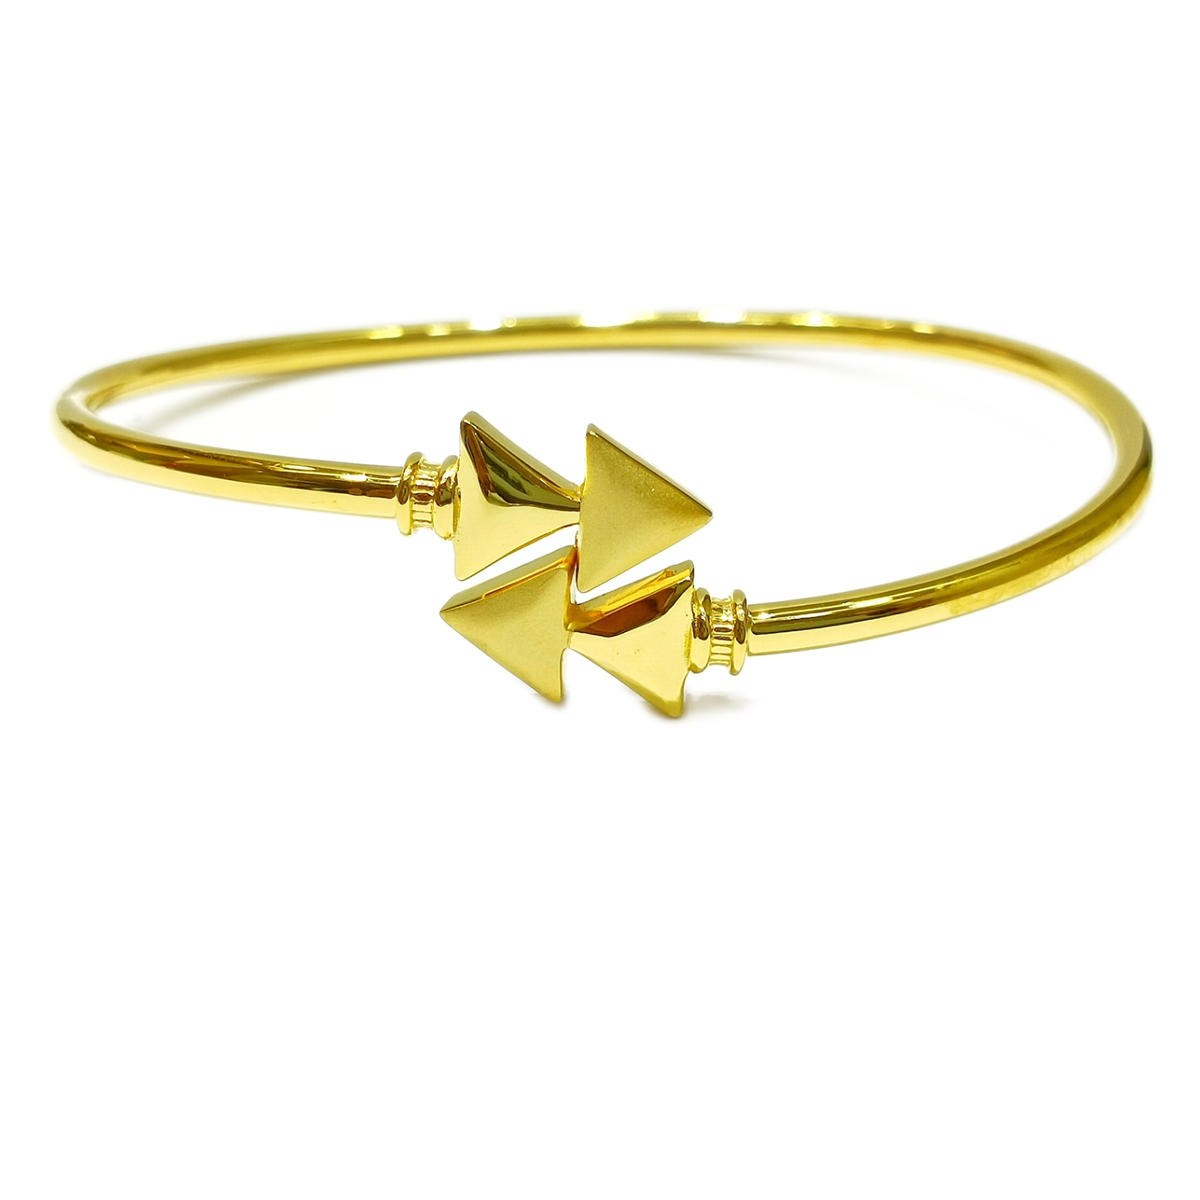 Crown Jewel gold bangles